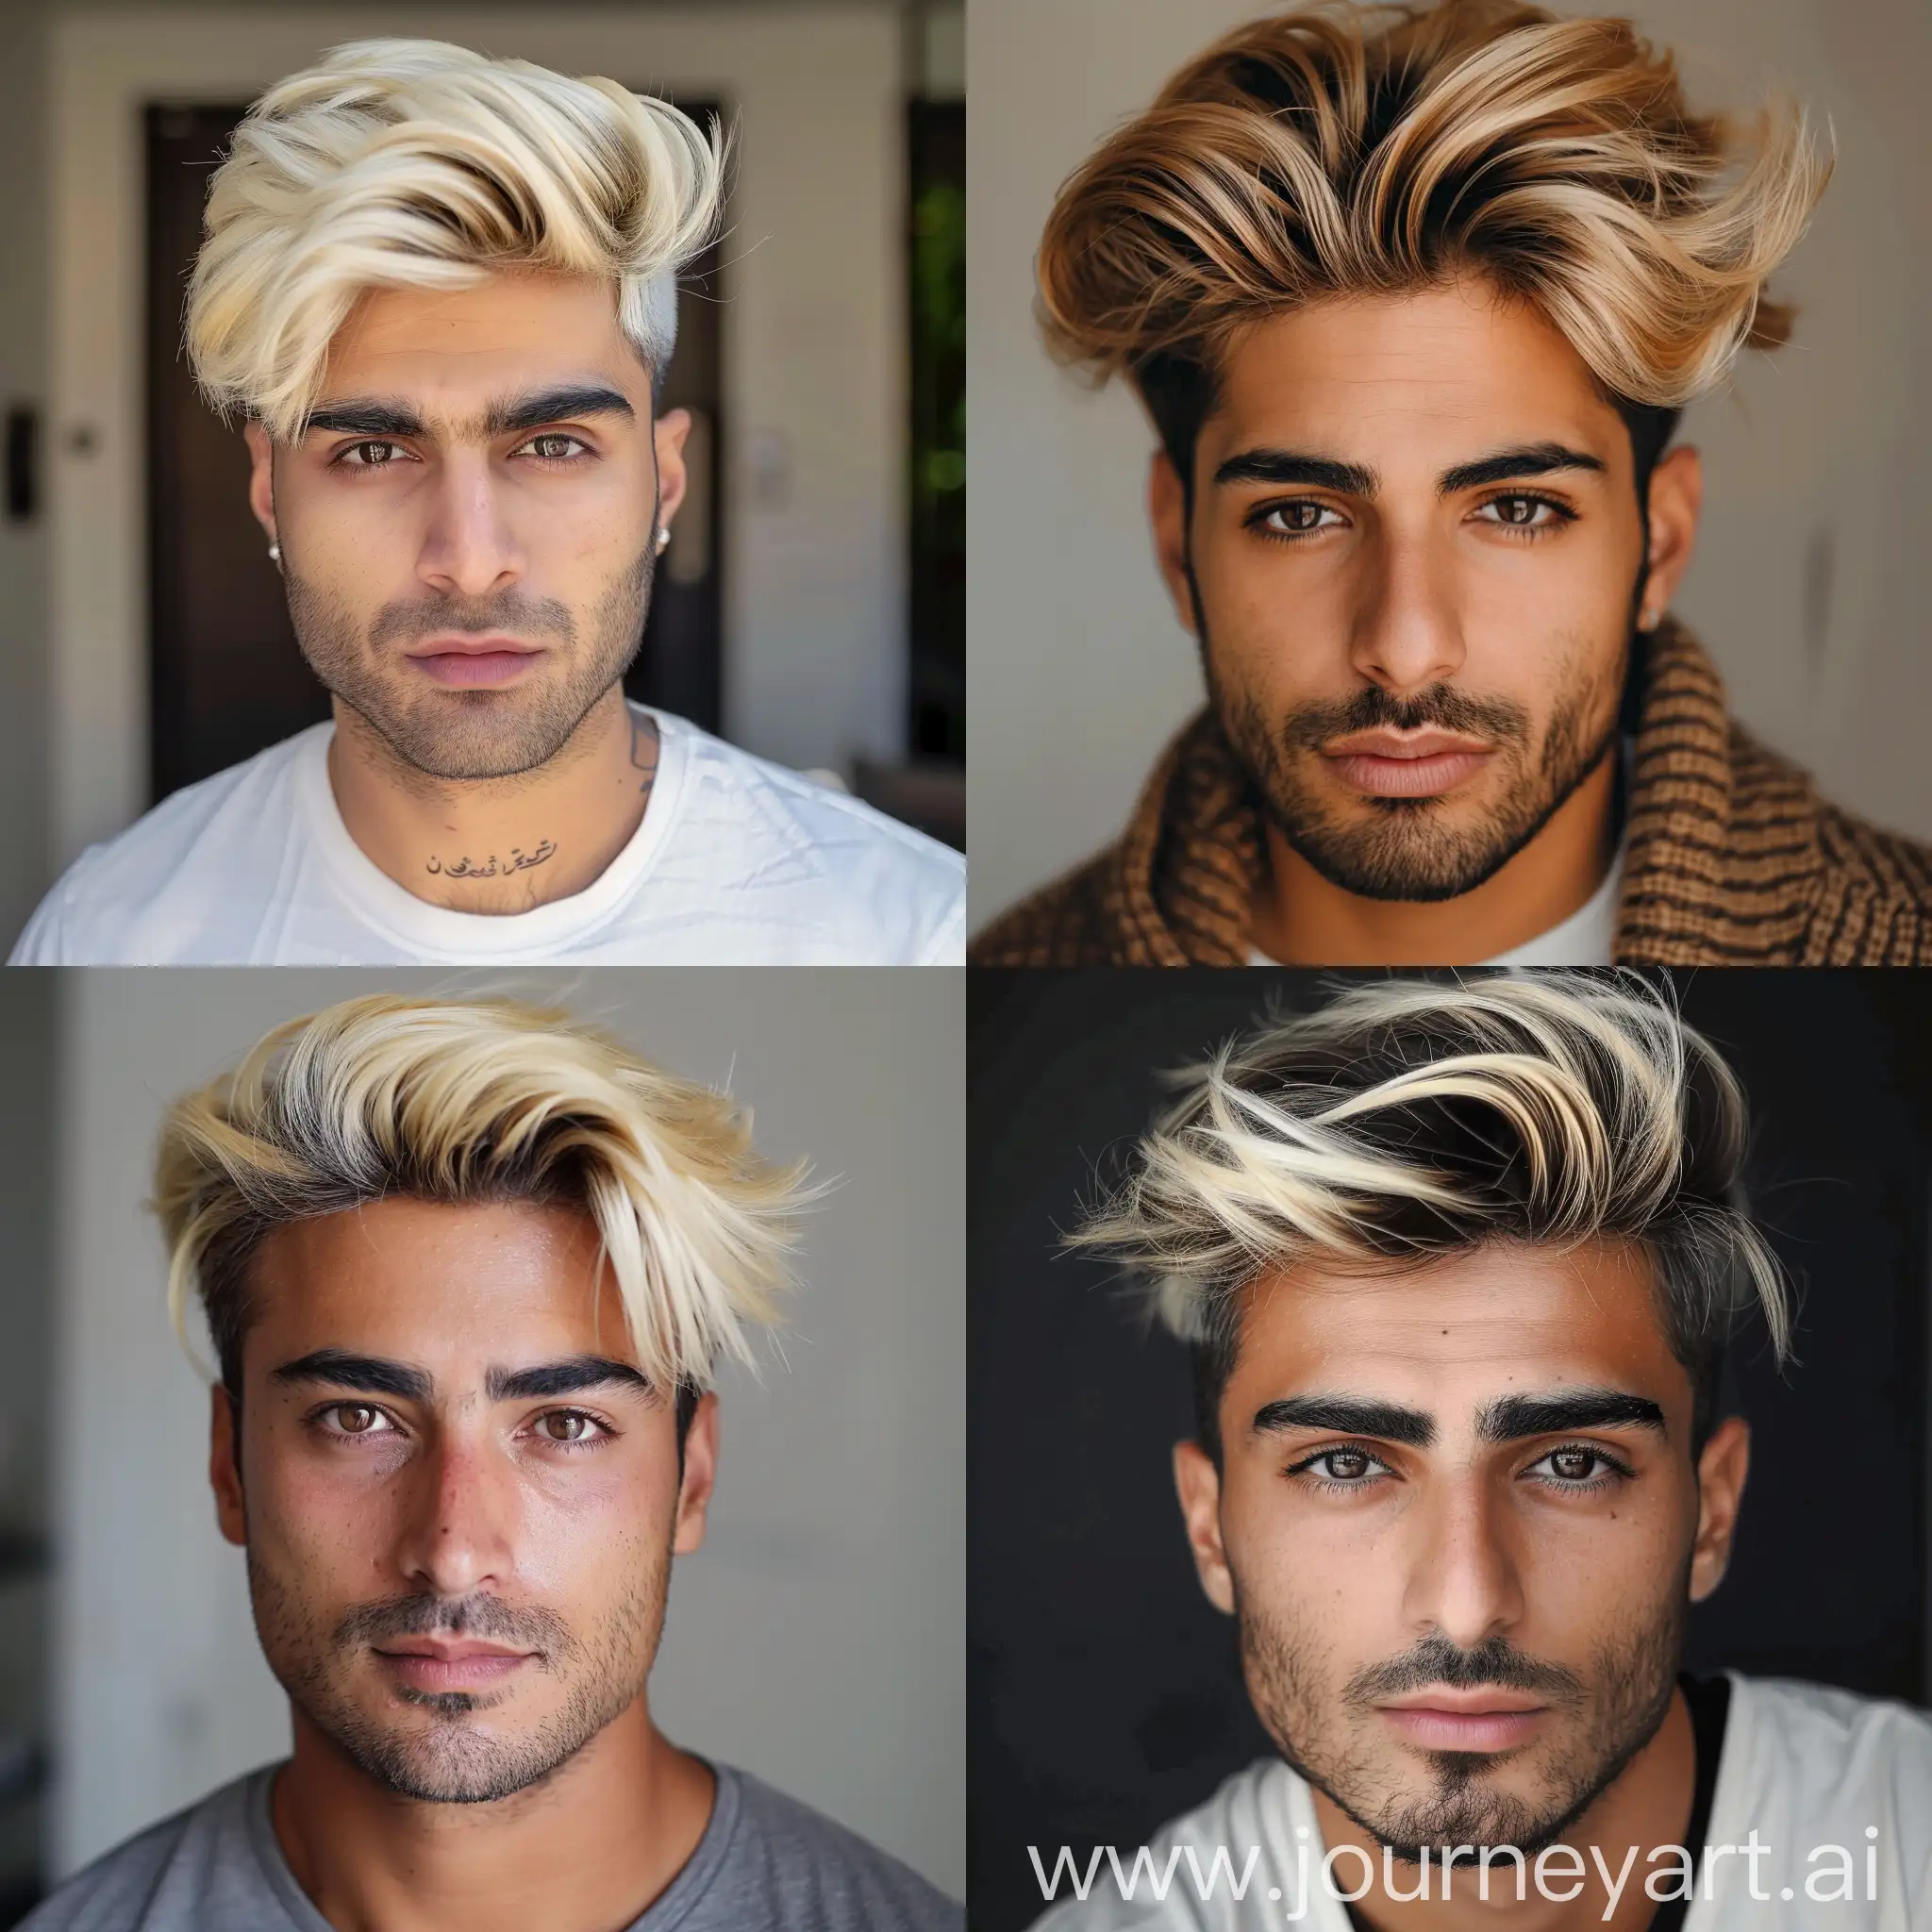 Blonde-Iranian-Man-Portrait-in-Square-Format